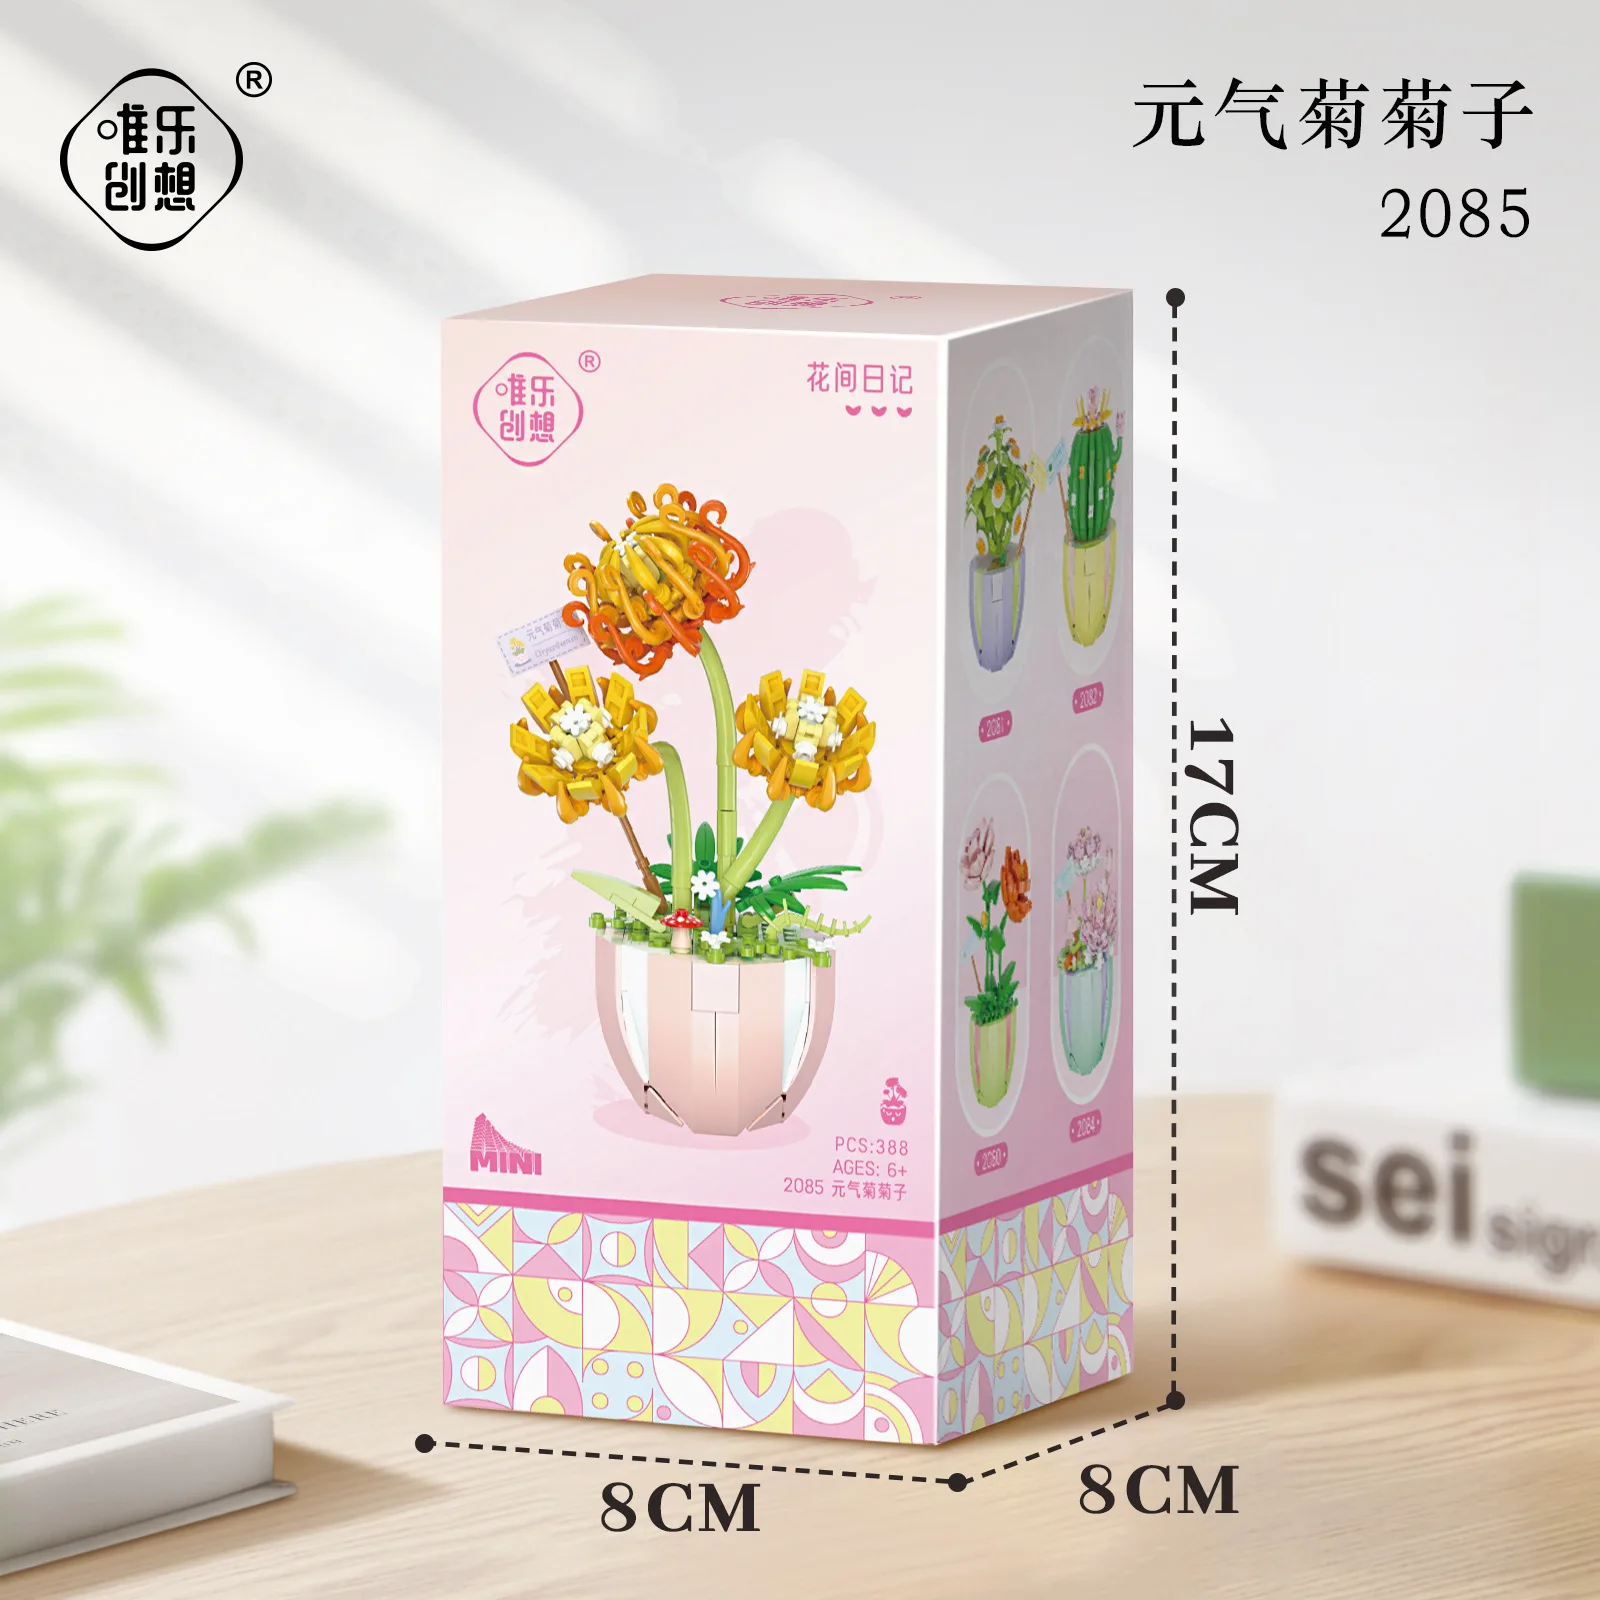 WL 2085 Diary of Flowers: Vitality Chrysanthemum